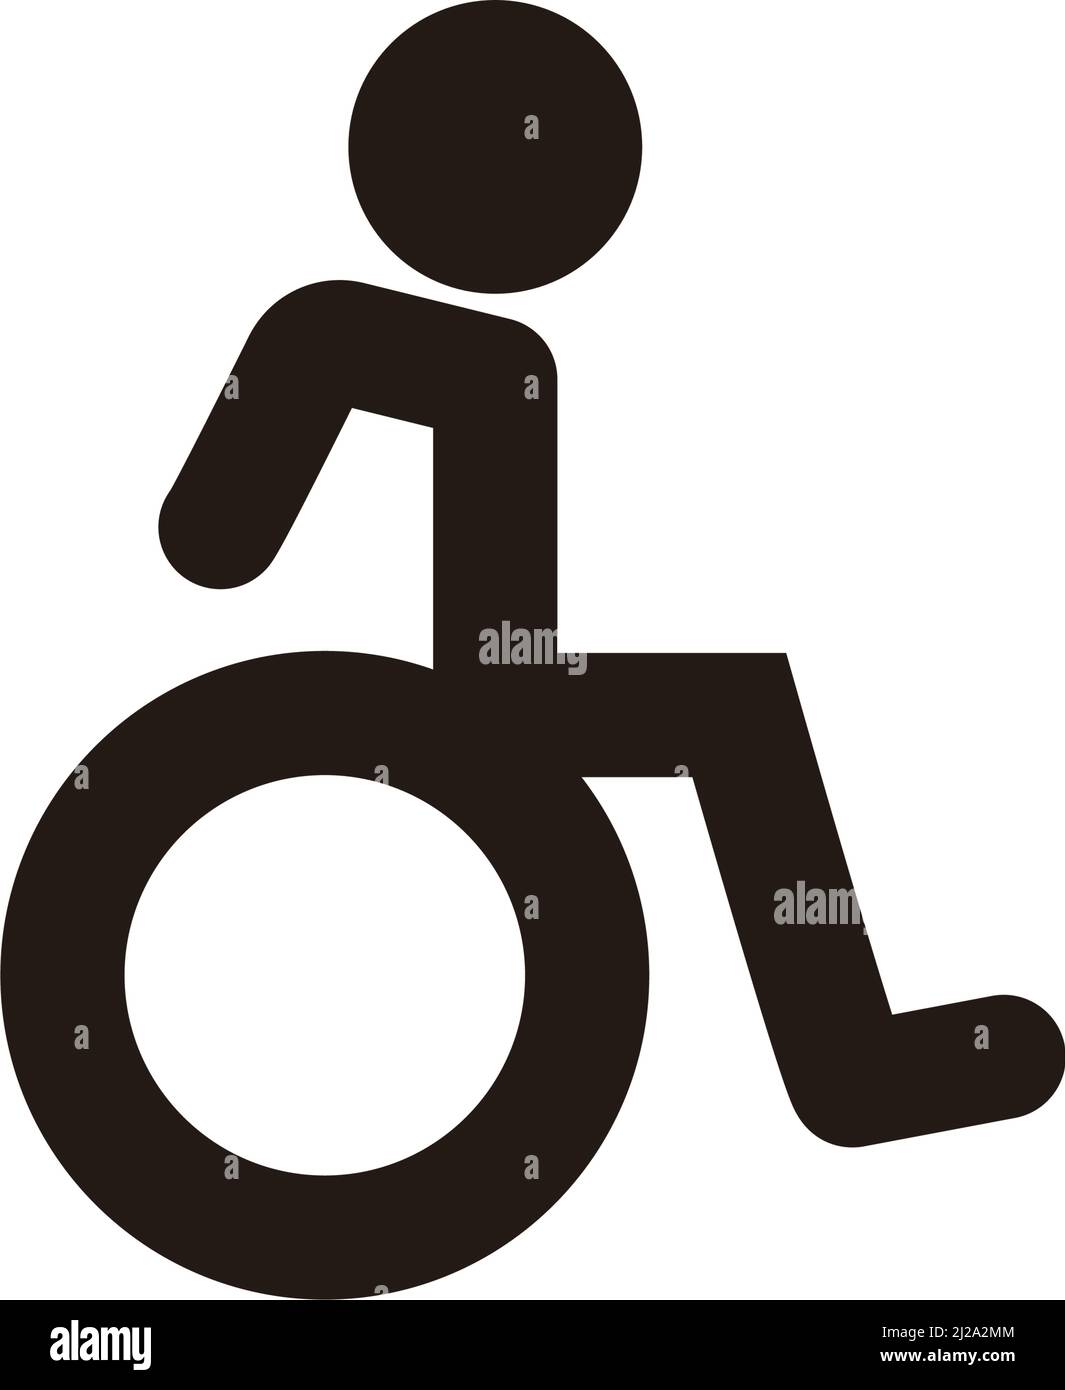 Eine Person, die einen Rollstuhl rudert. Bearbeitbarer Vektor. Stock Vektor